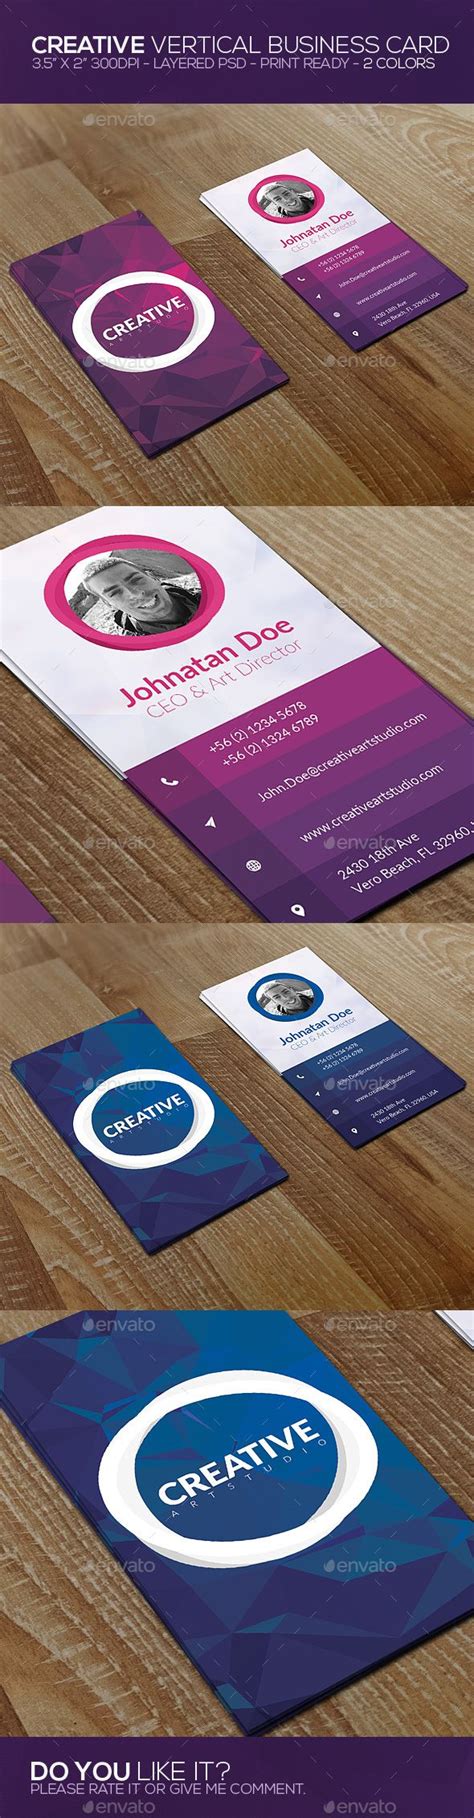 business card mockups for creative medical businesses